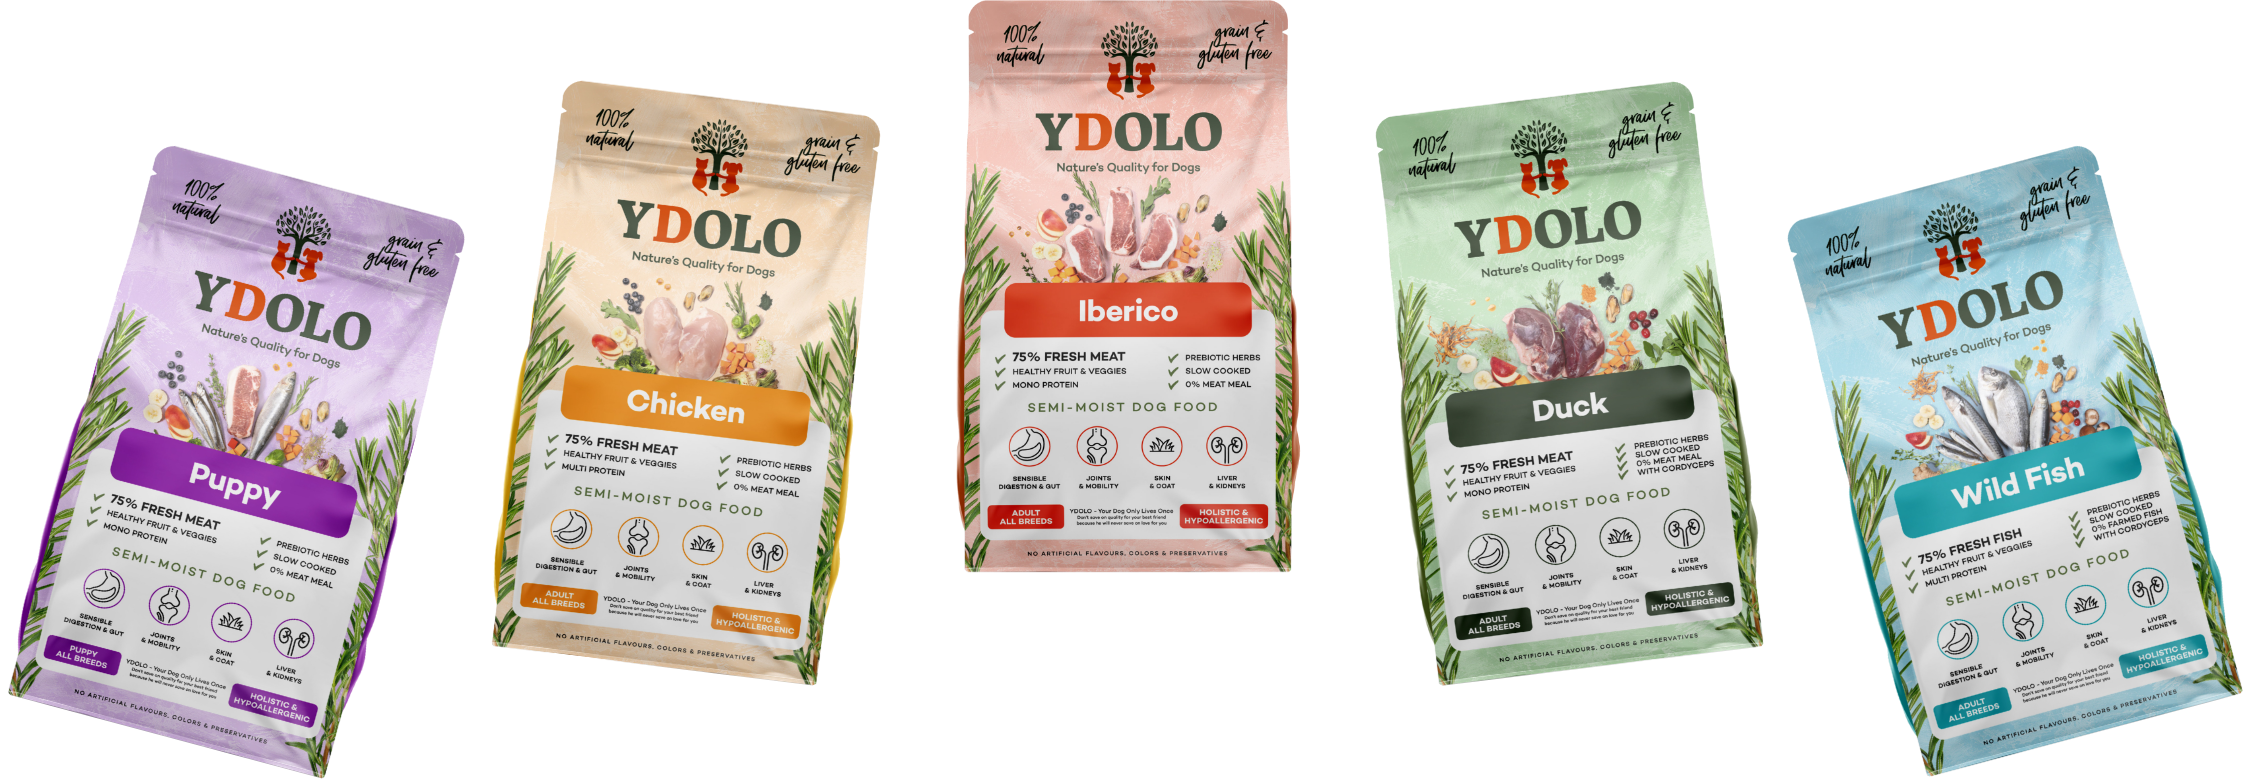 Image YDOLO | The Healthiest Dog Food on the European Market